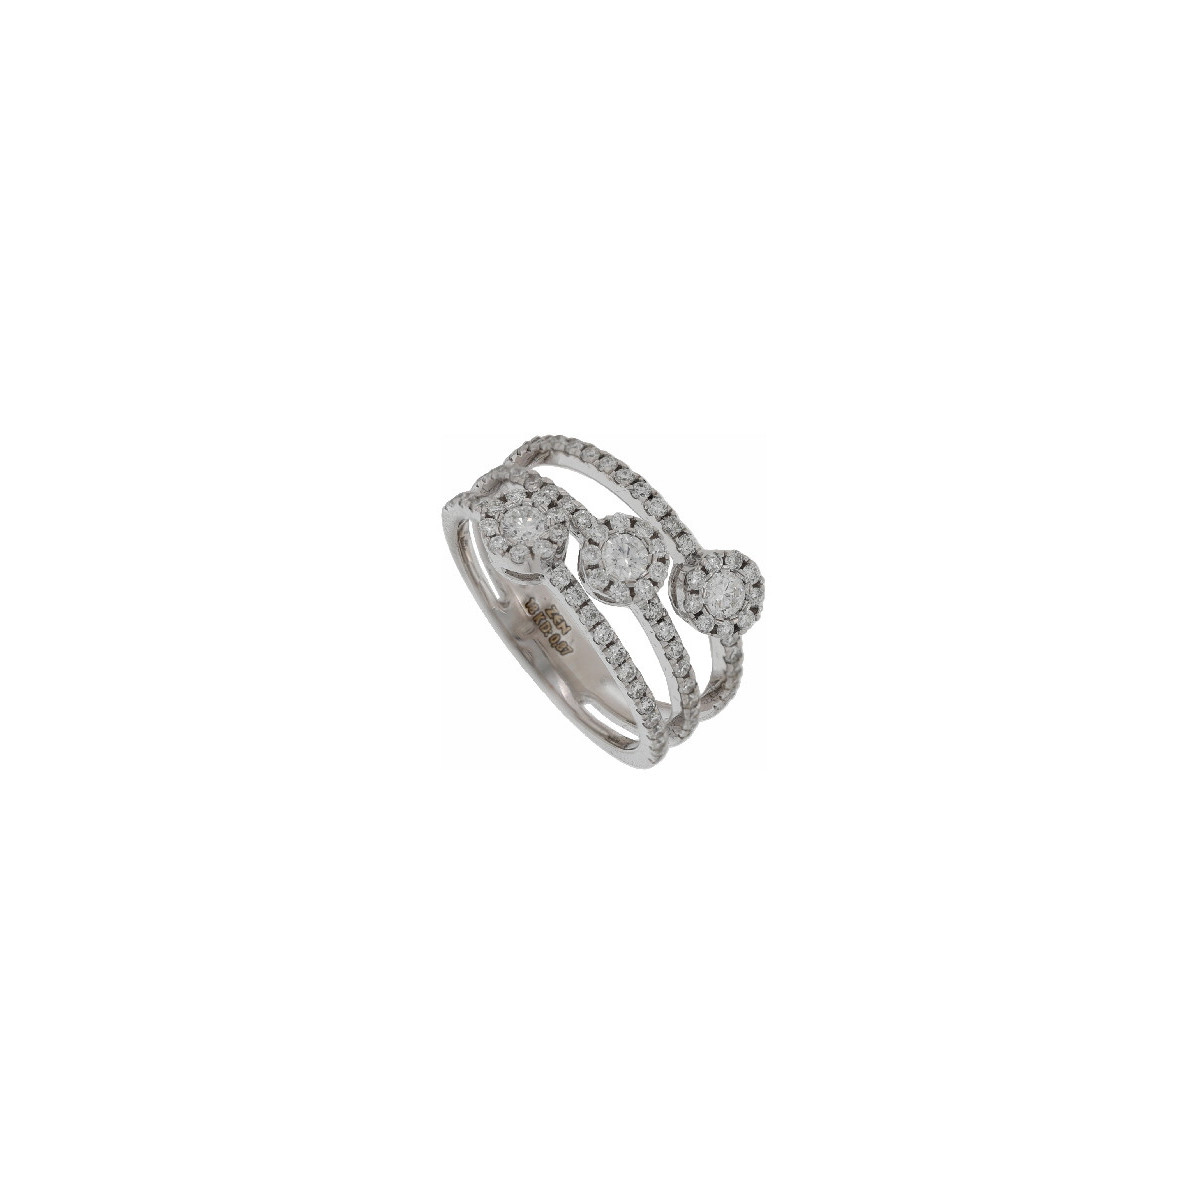 Cintillo Roseta Oro Blanco Diamante - RG101152-118 0,87